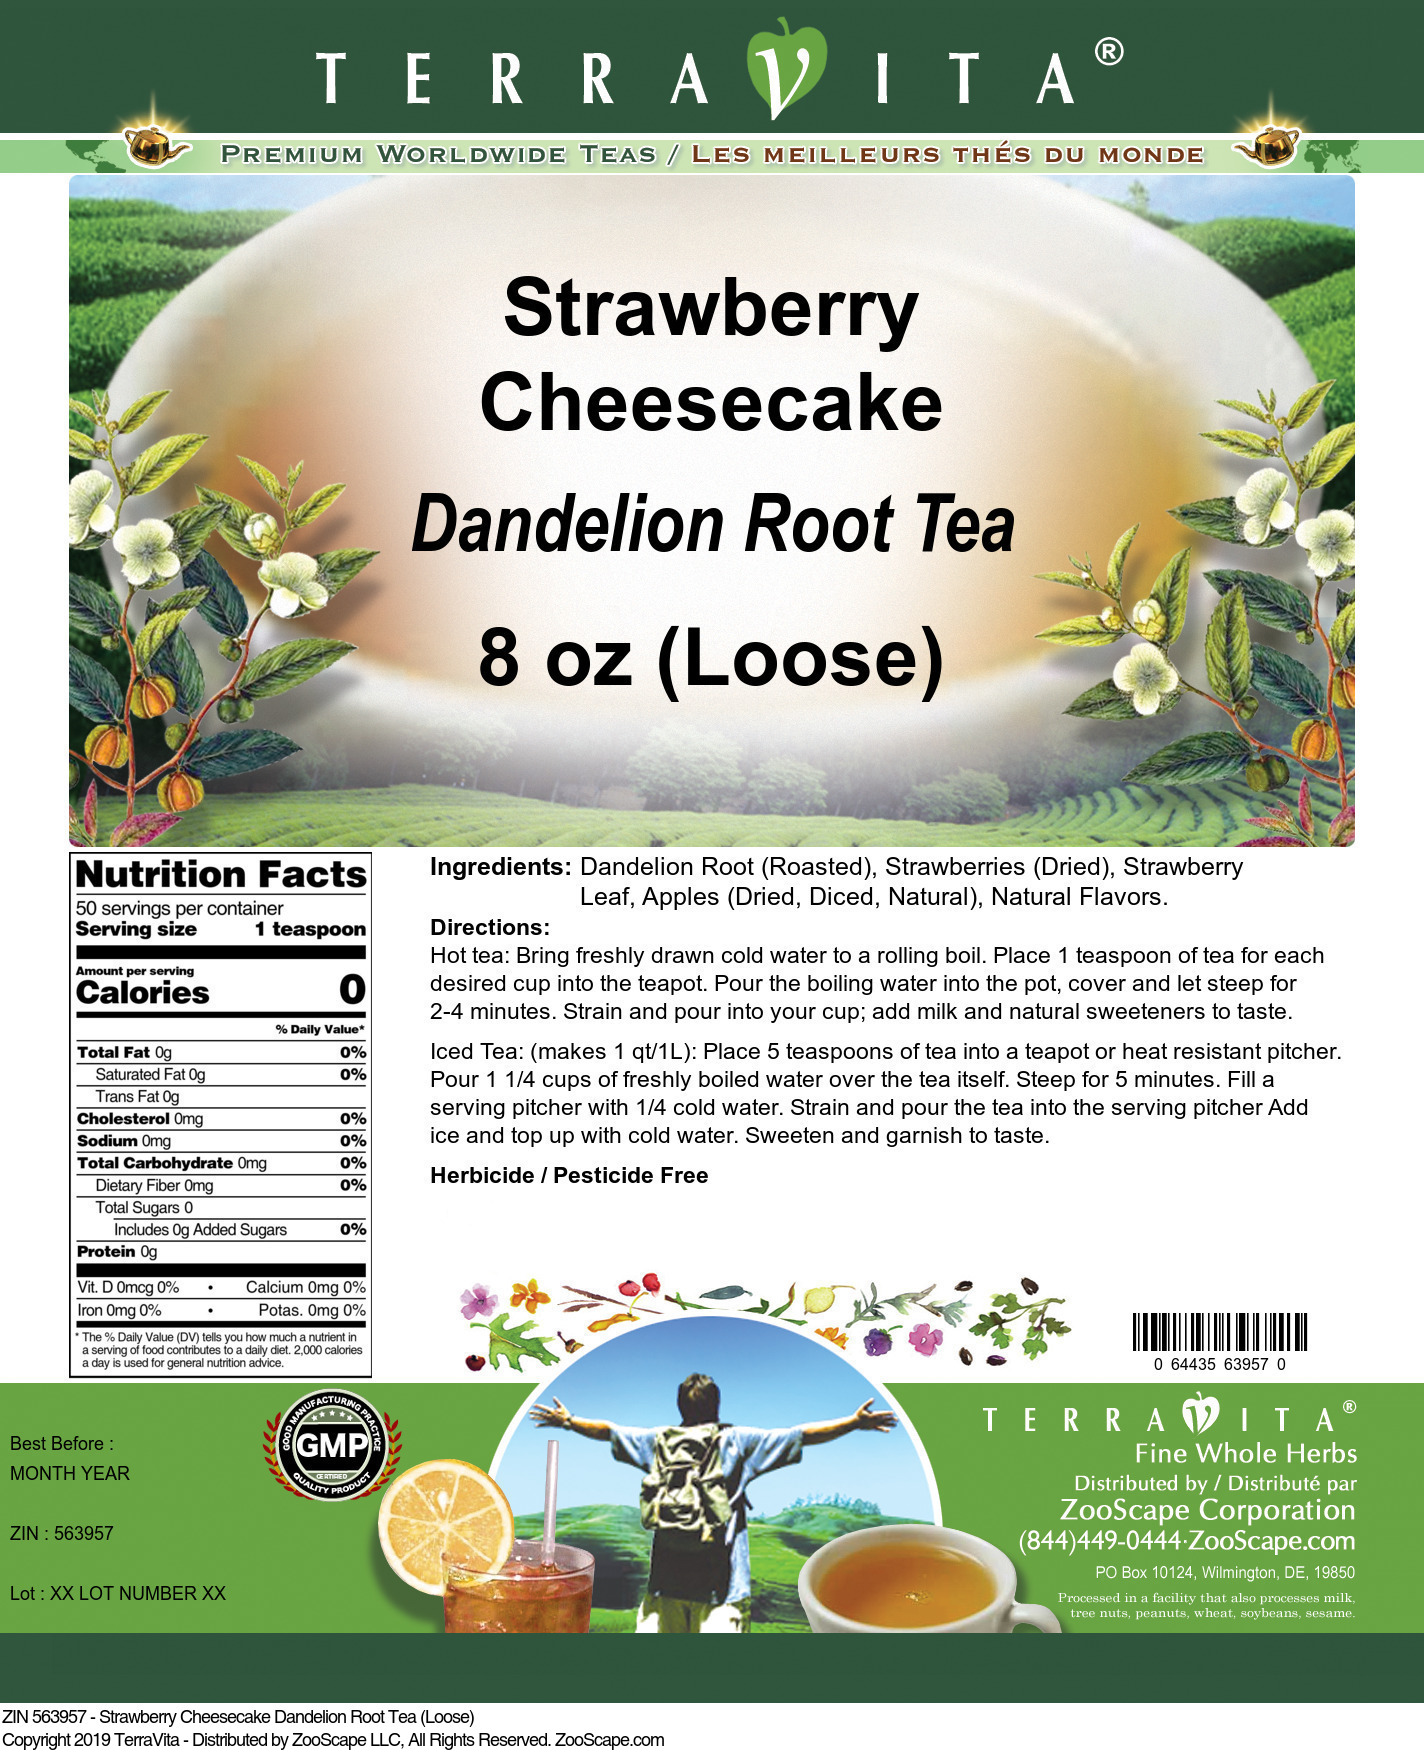 Strawberry Cheesecake Dandelion Root Tea (Loose) - Label